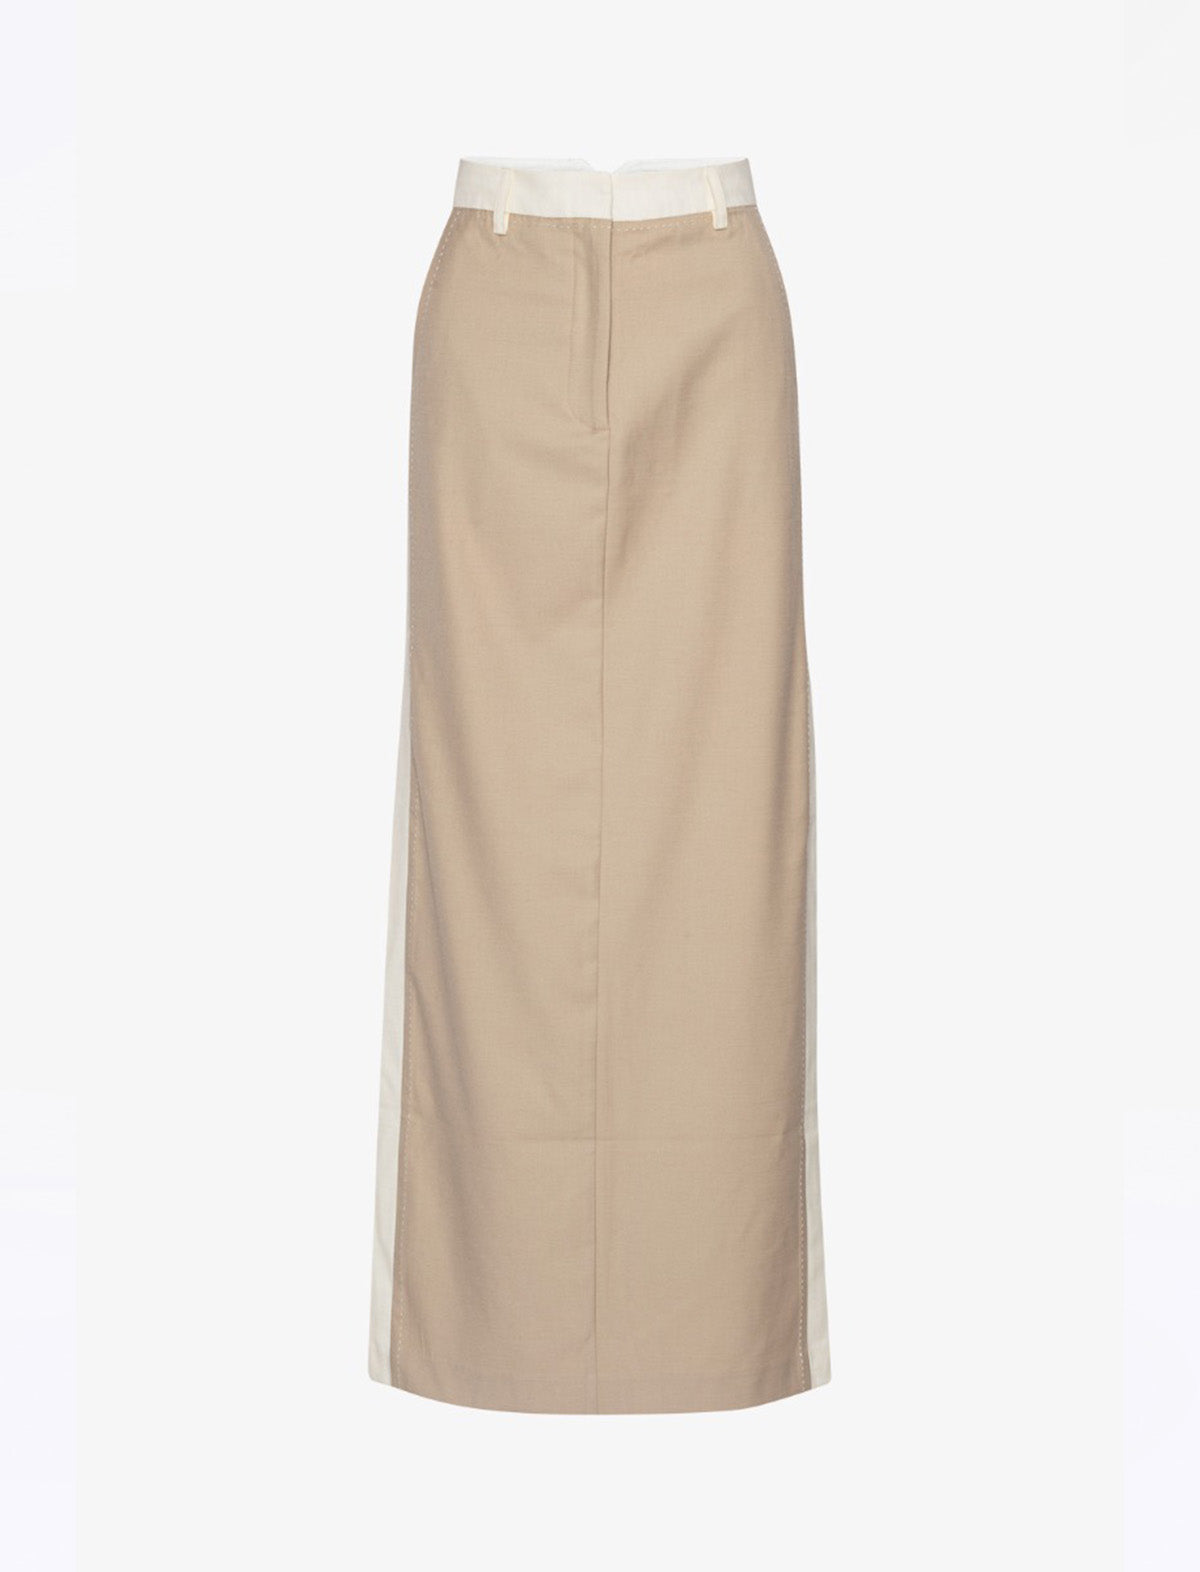 REMAIN Two Color Maxi Skirt in Safari Comb